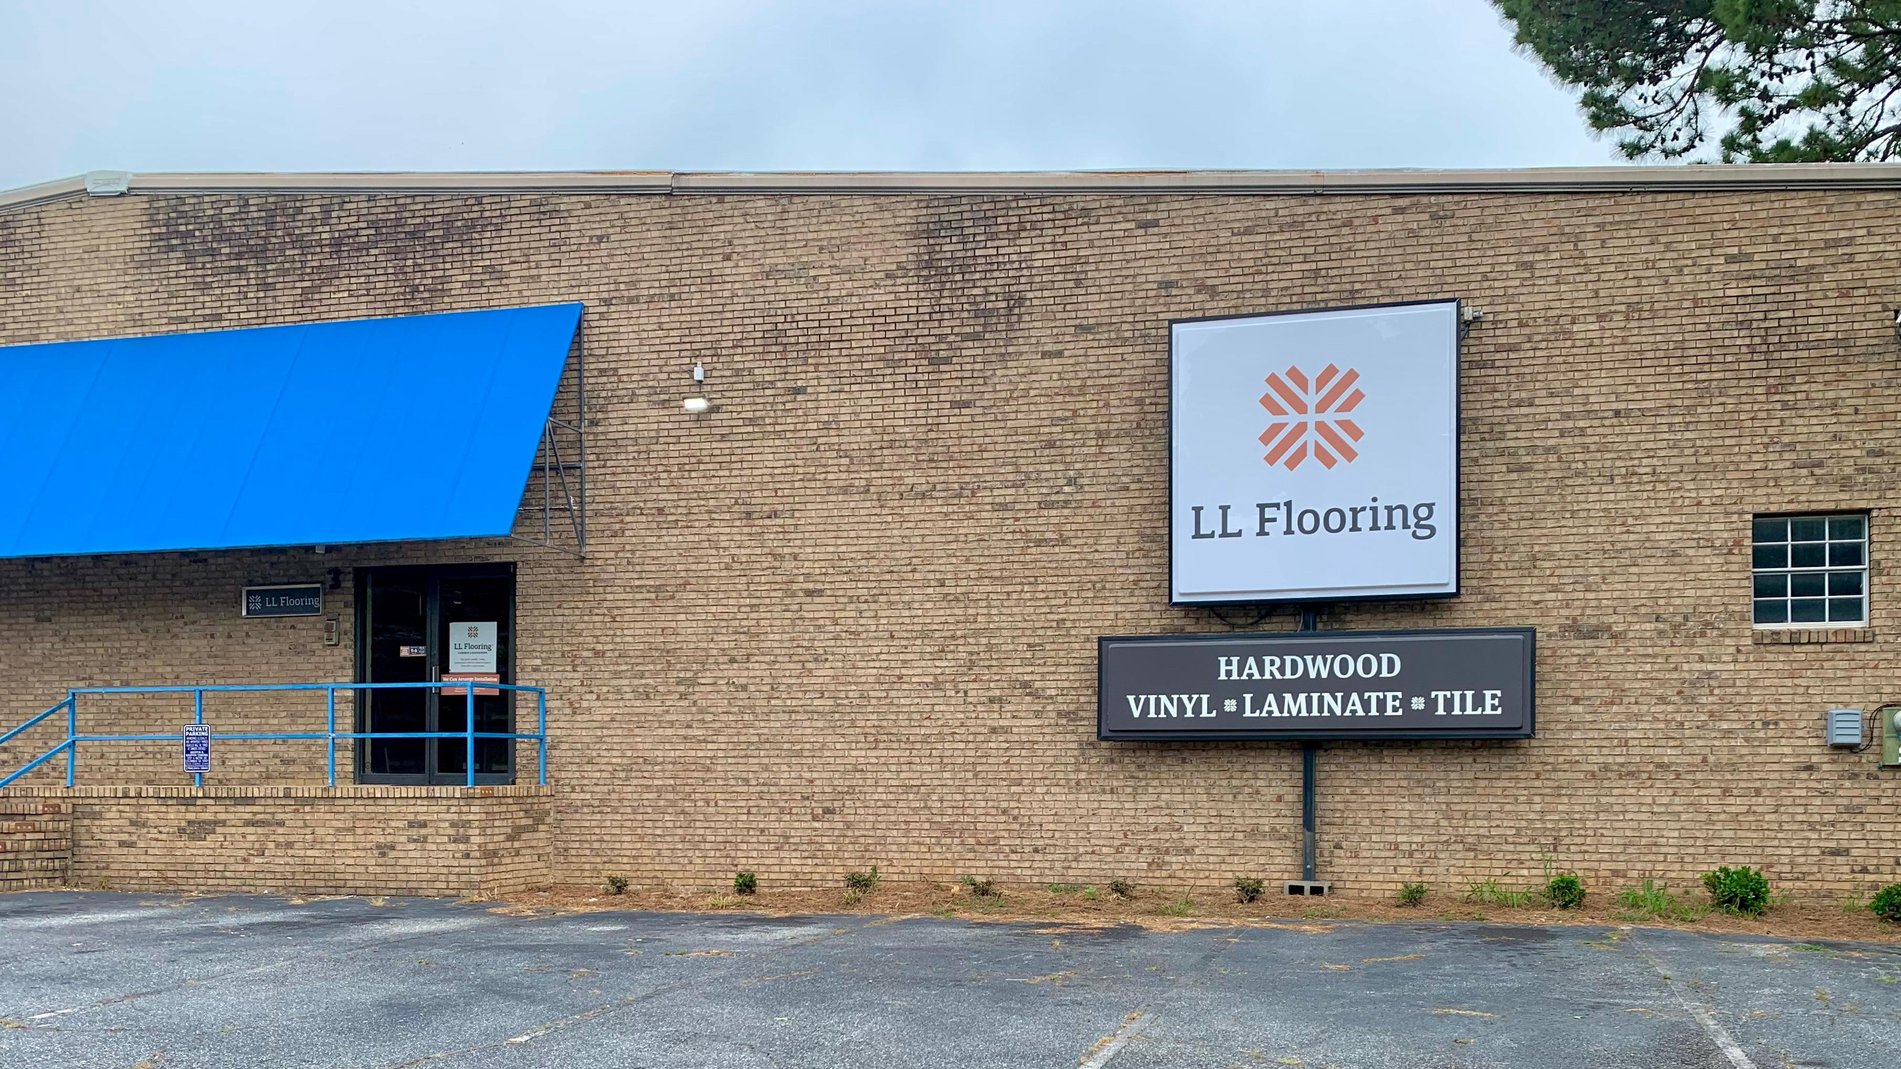 LL Flooring #1158 Columbus | 4211 Milgen Road | Storefront